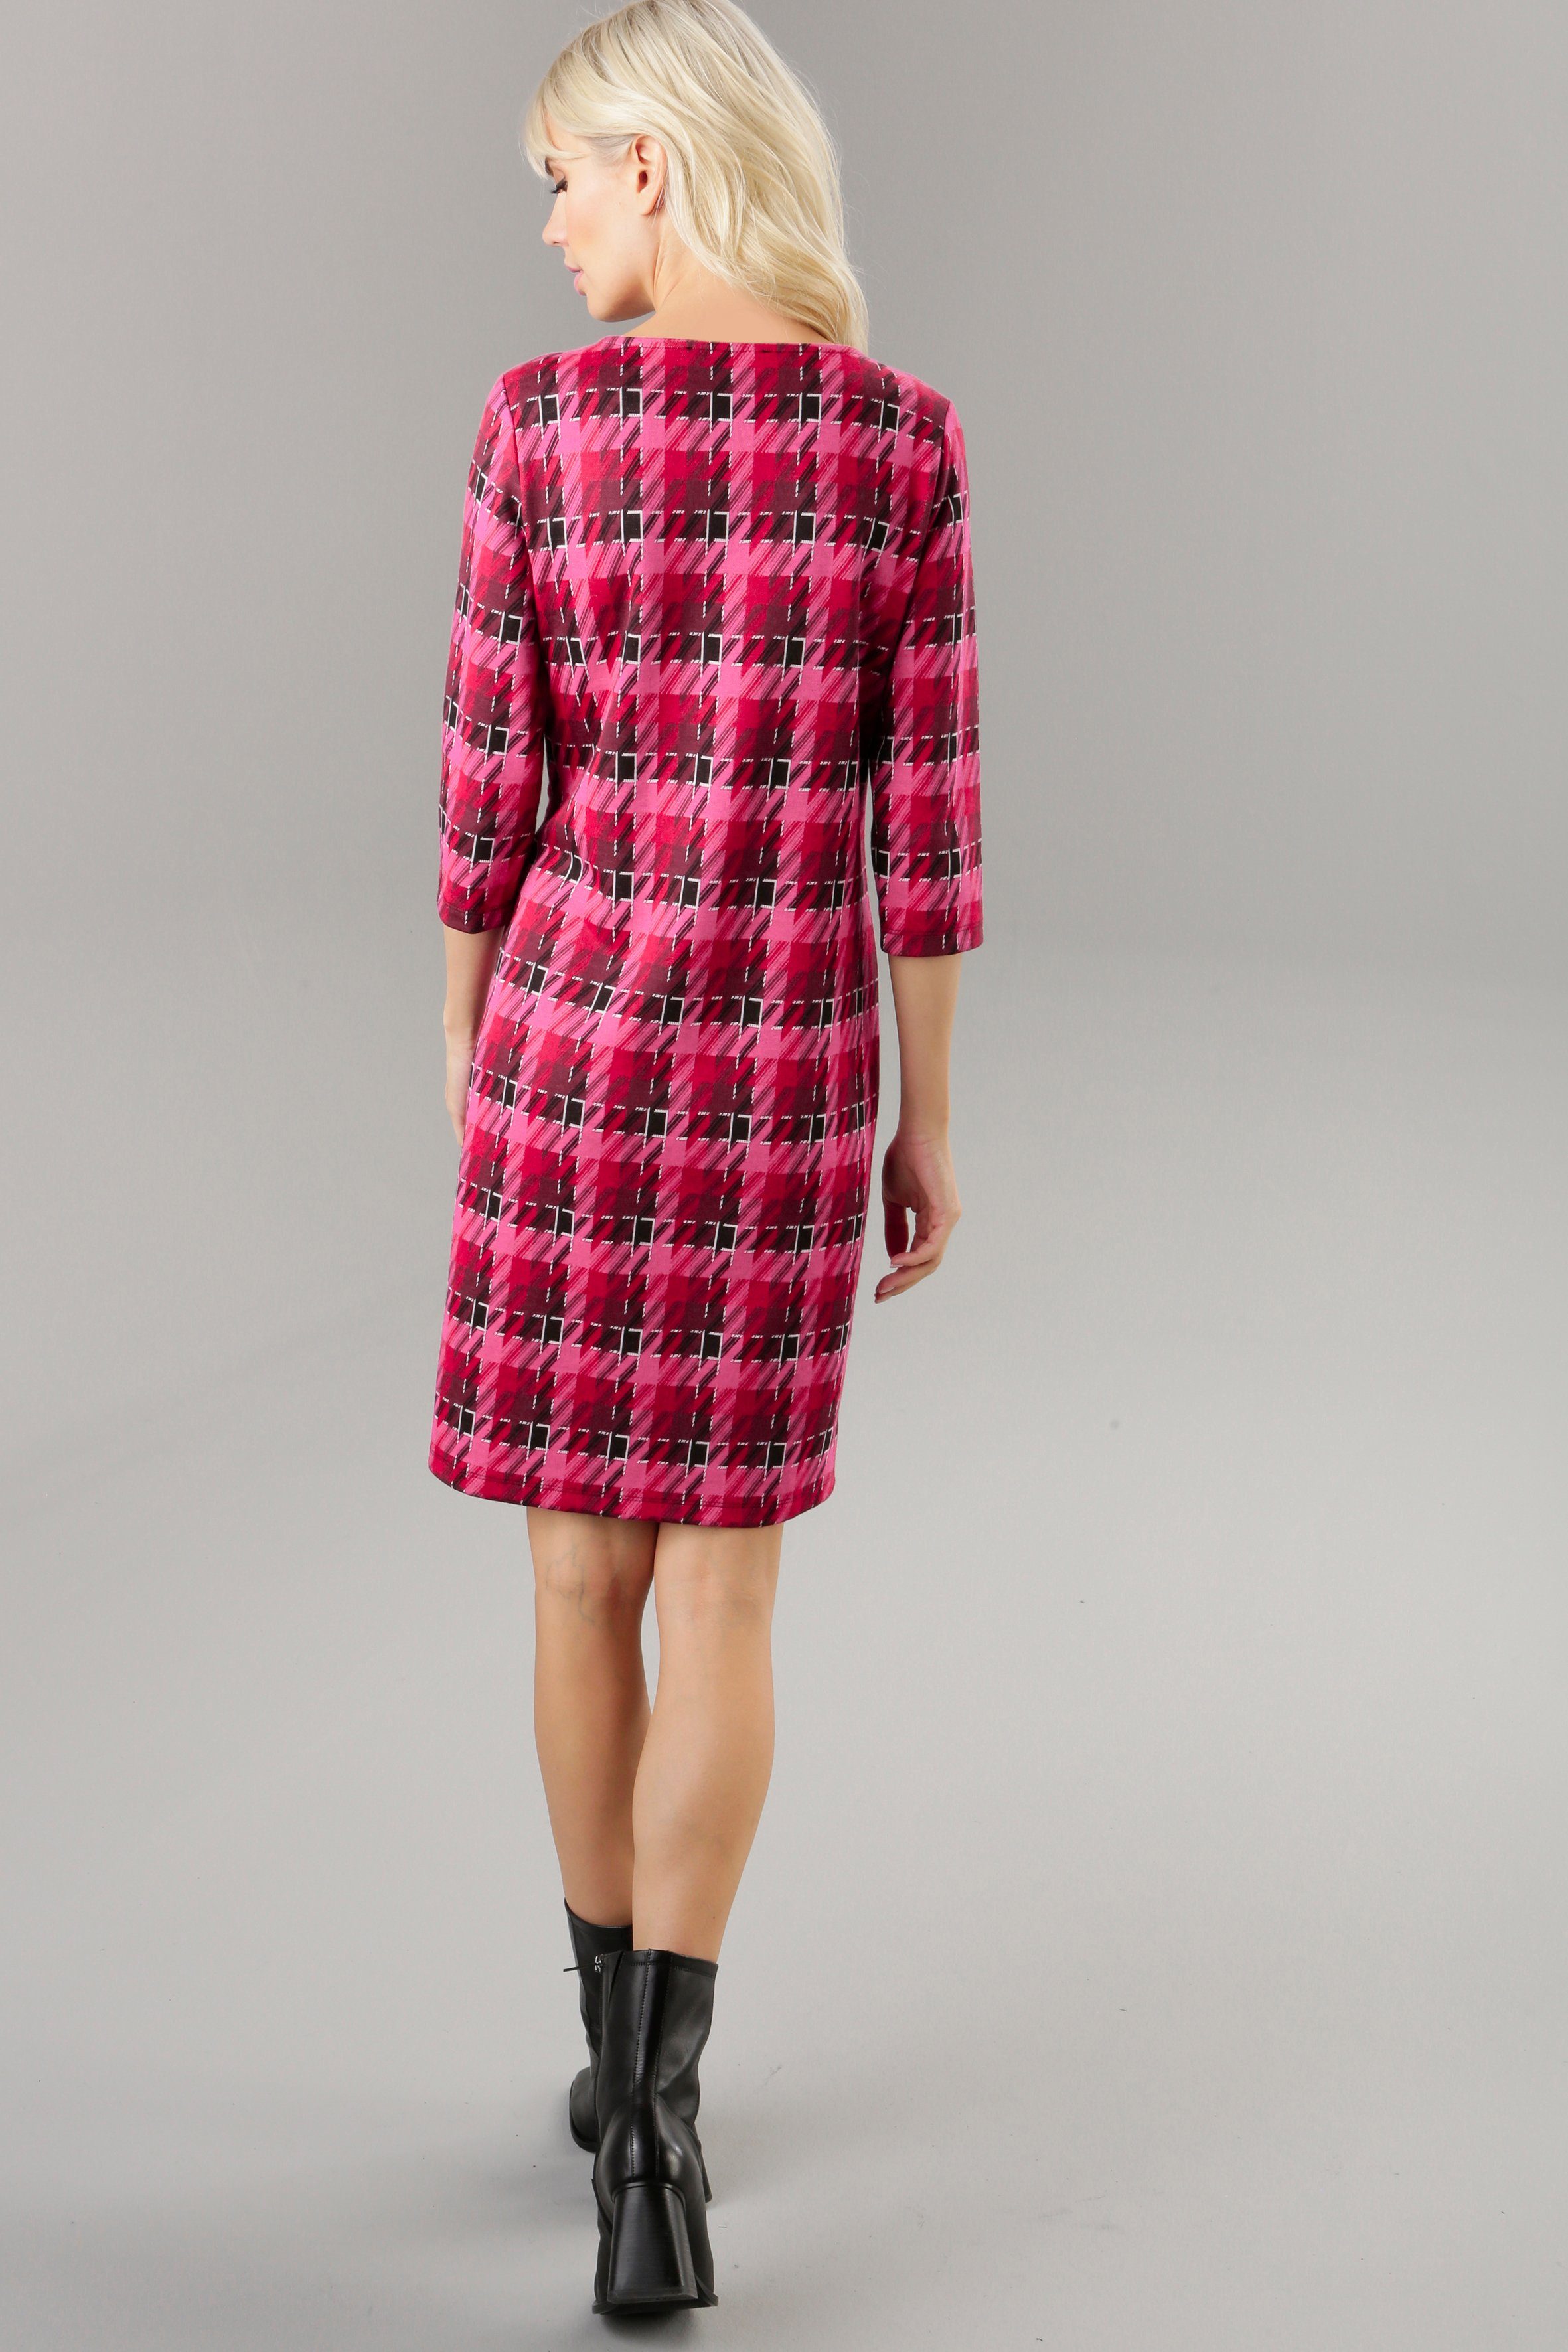 Aniston SELECTED Jerseykleid mit trendy Allover-Muster in Knallfarben | Sweatkleider